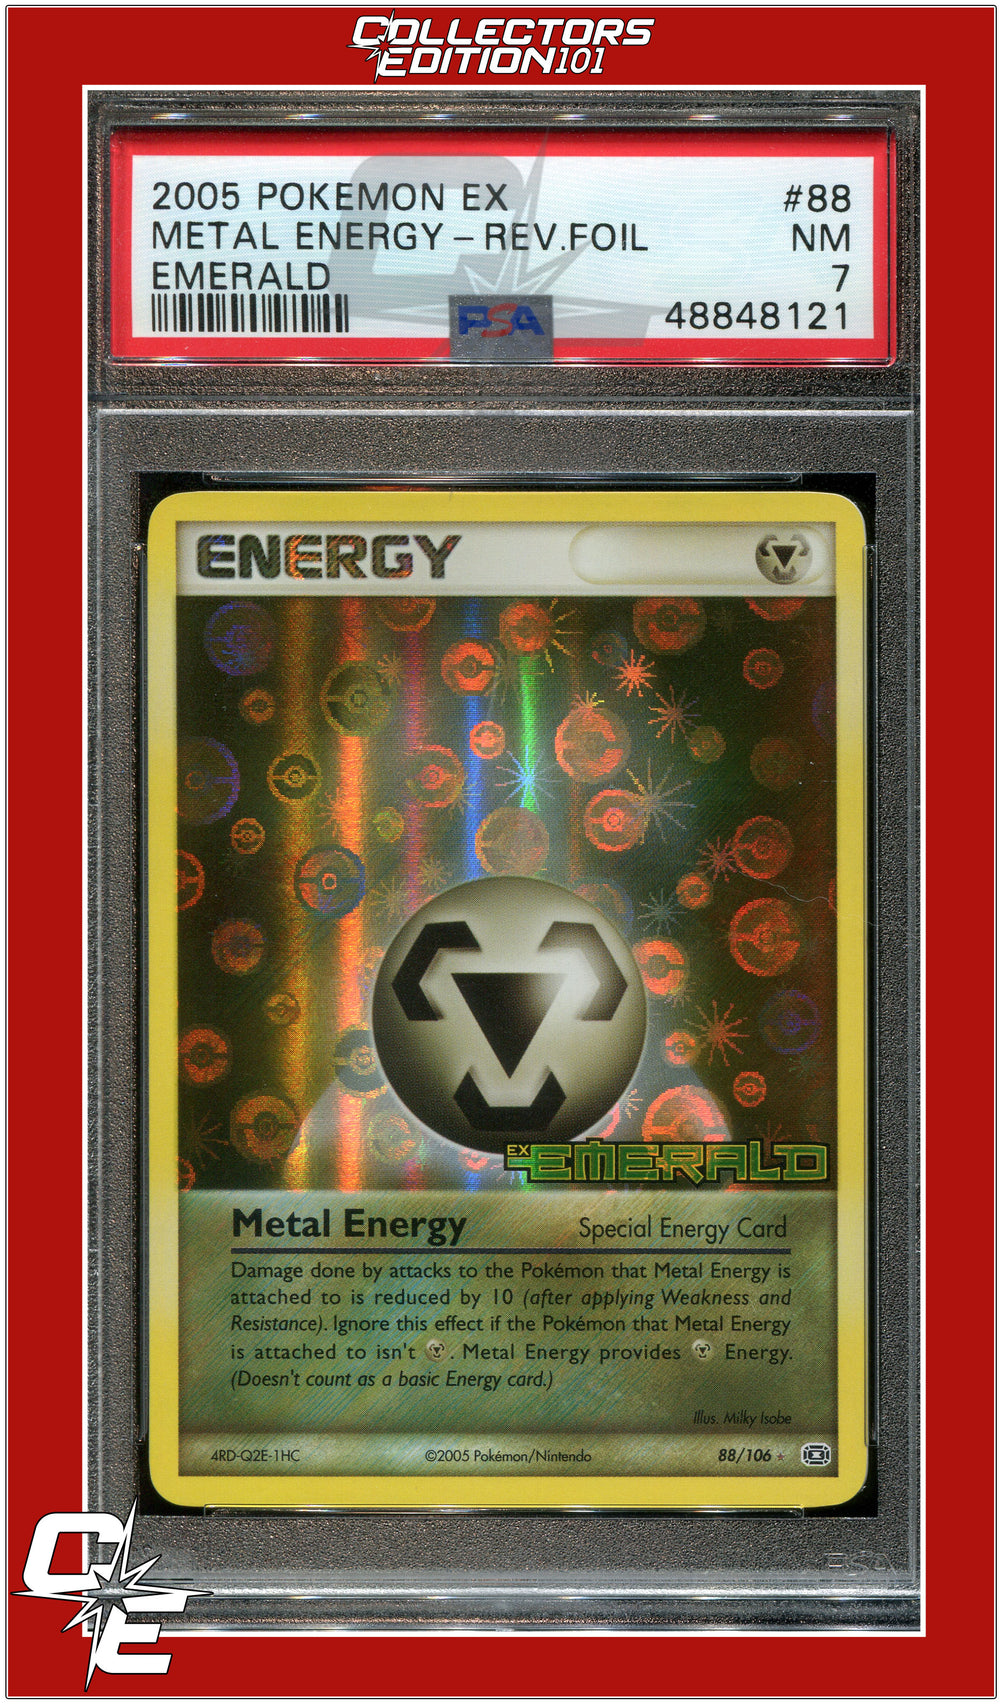 EX Emerald 88 Metal Energy Reverse Foil PSA 7